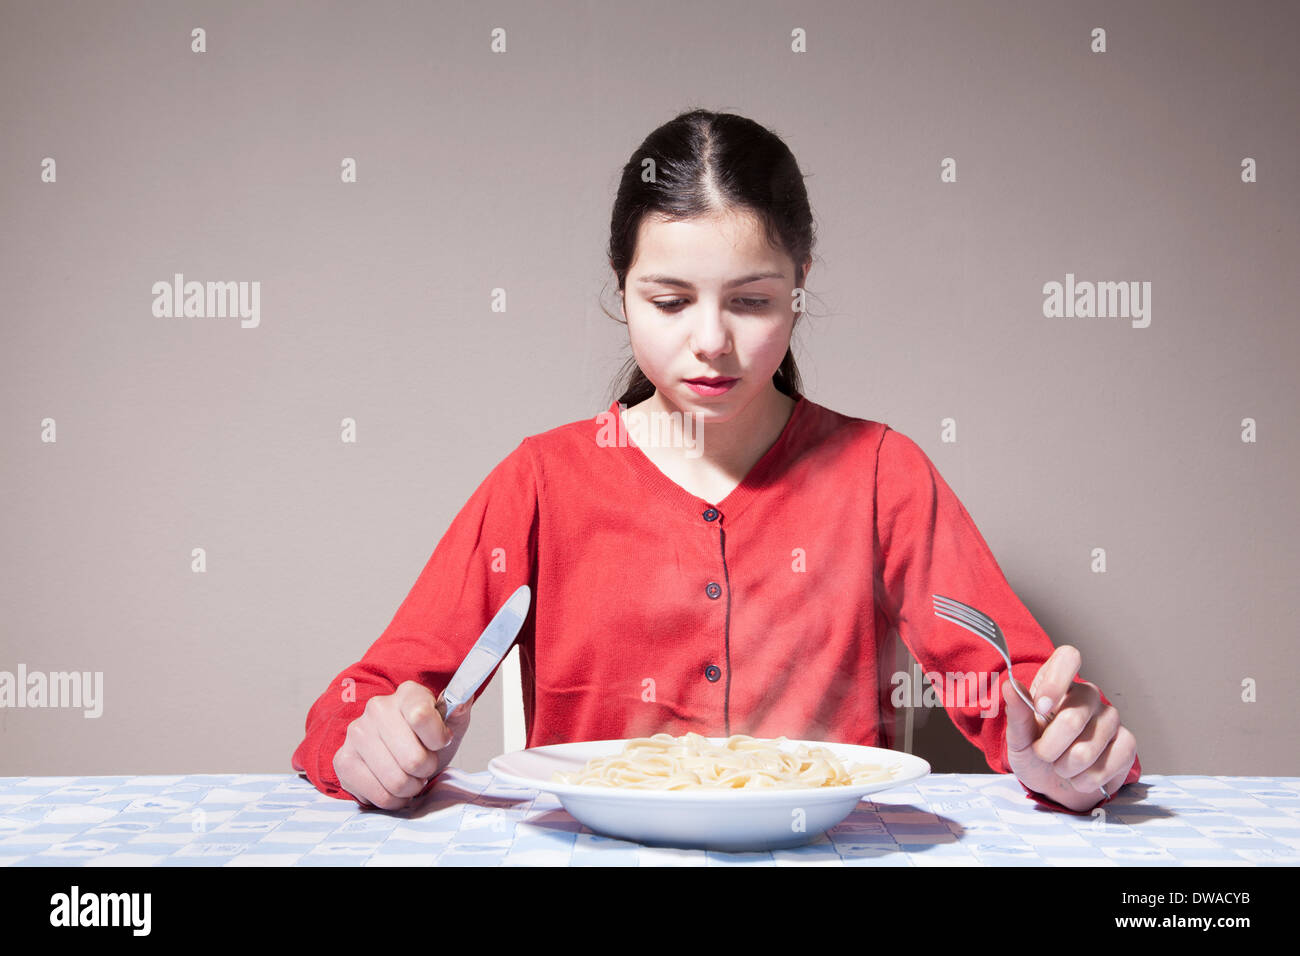 Teenage girl eating pasta Stock Photo